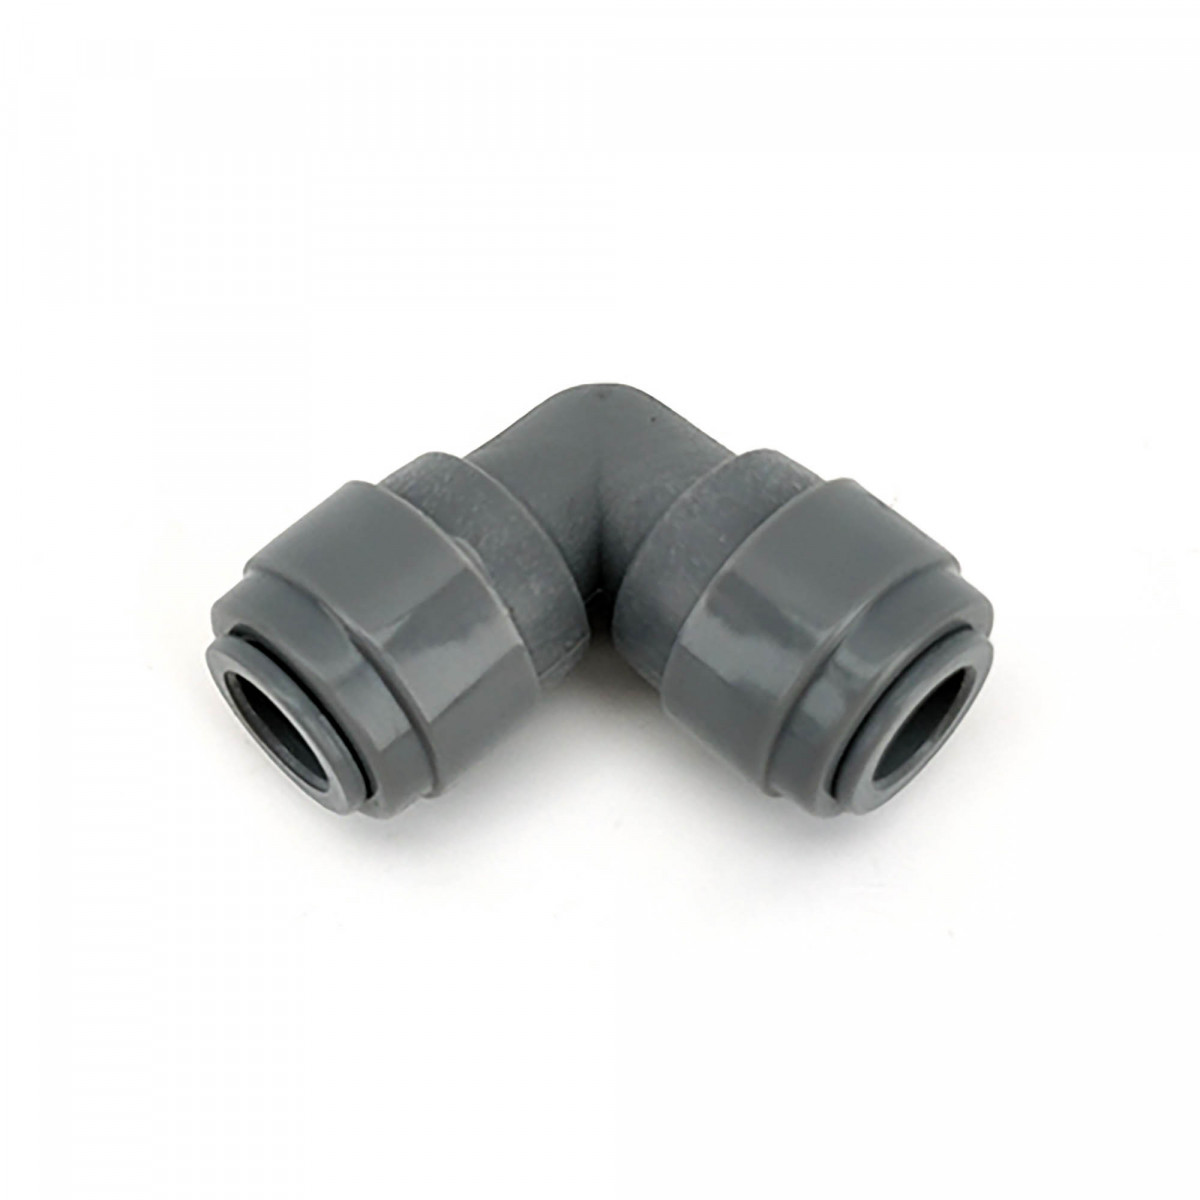 Duotight 8 mm (5/16”) push-in koppeling elleboogstuk